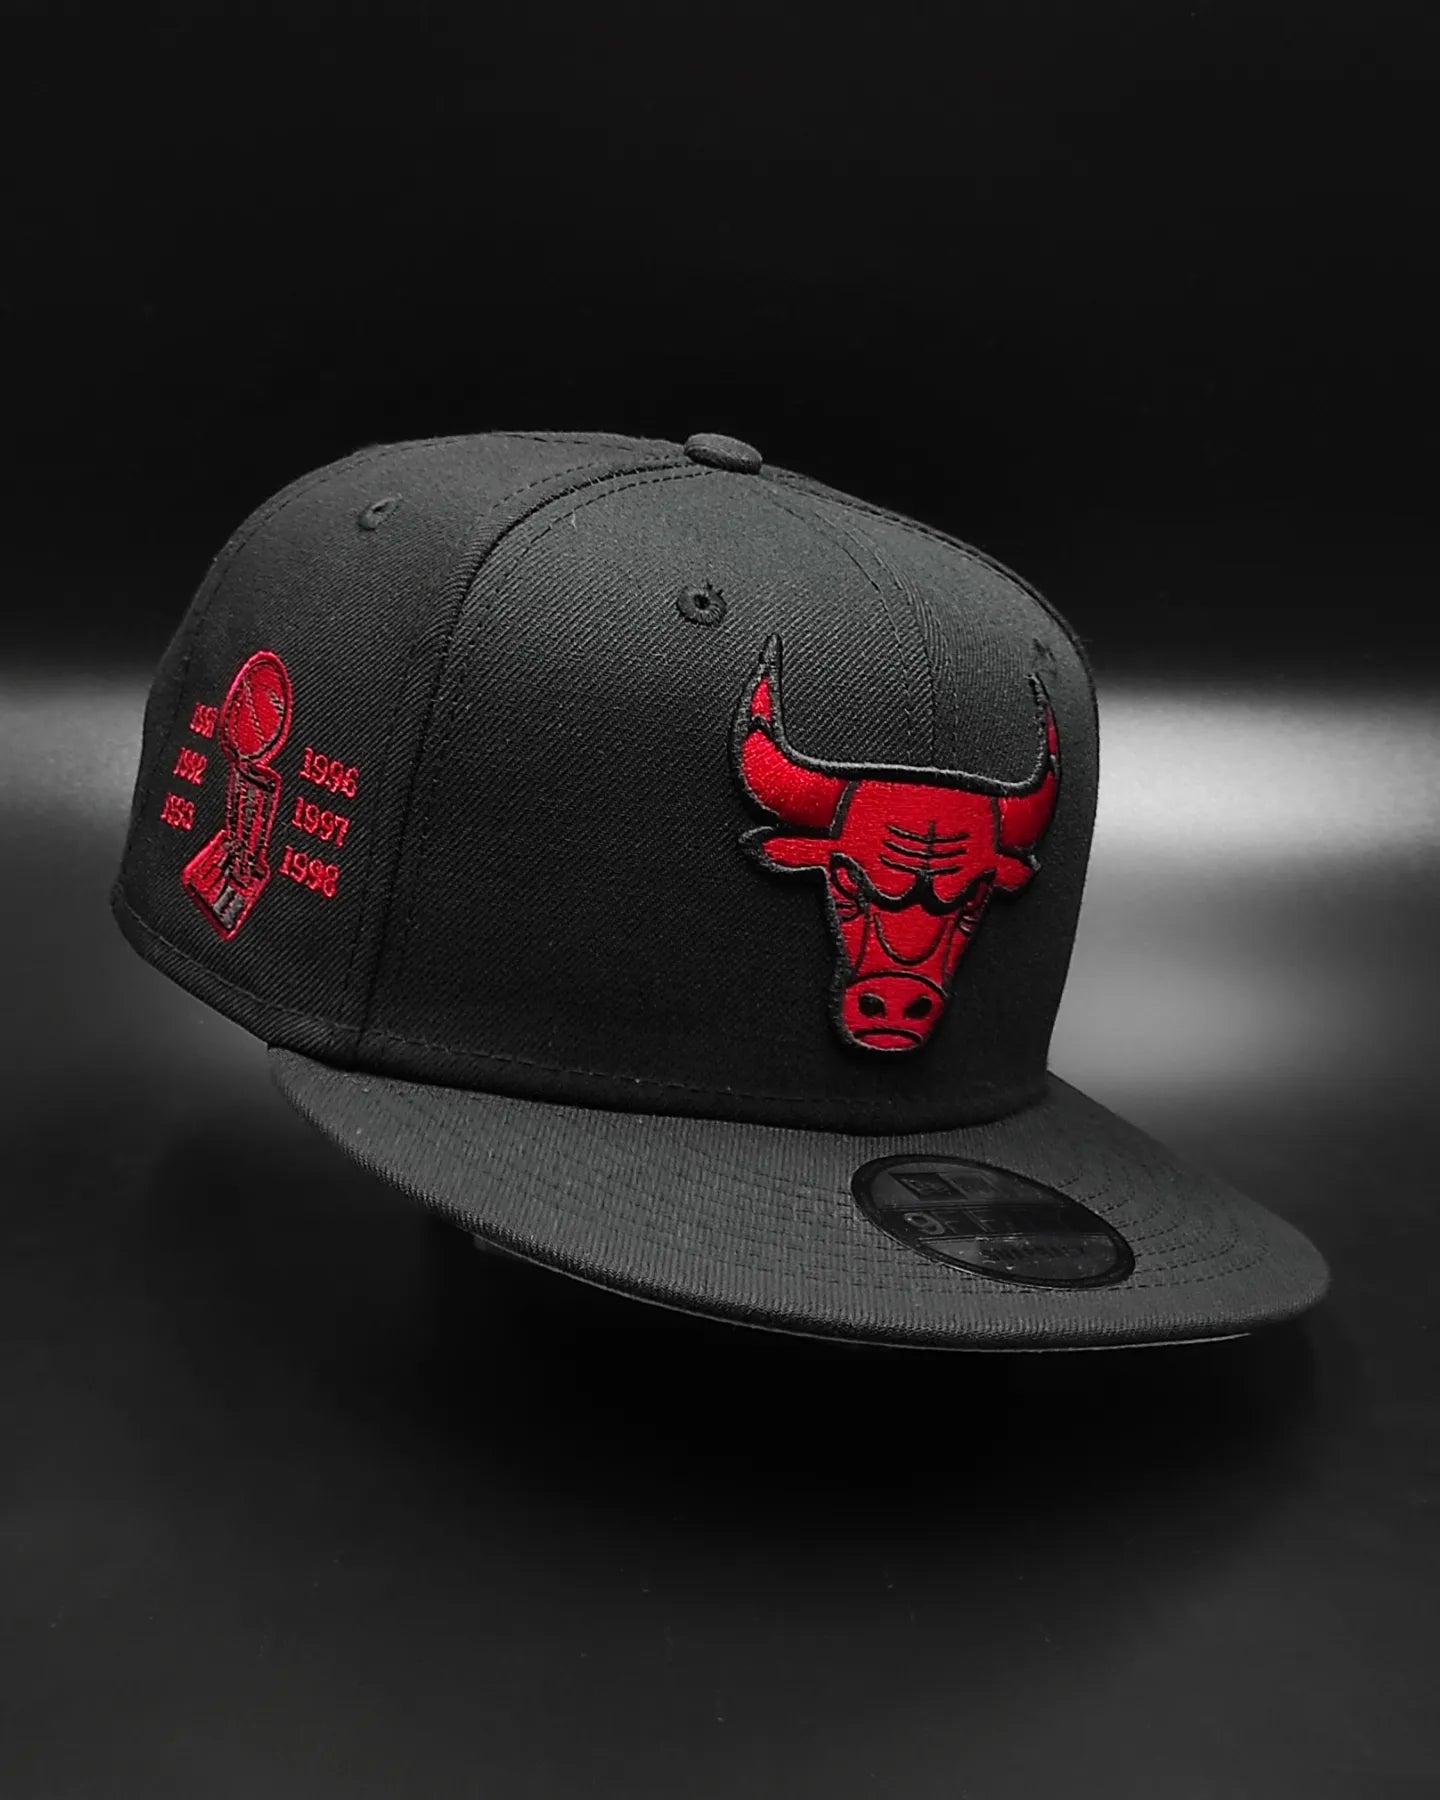 New Era chicago Bulls champions red edition 9fifty snapback cap